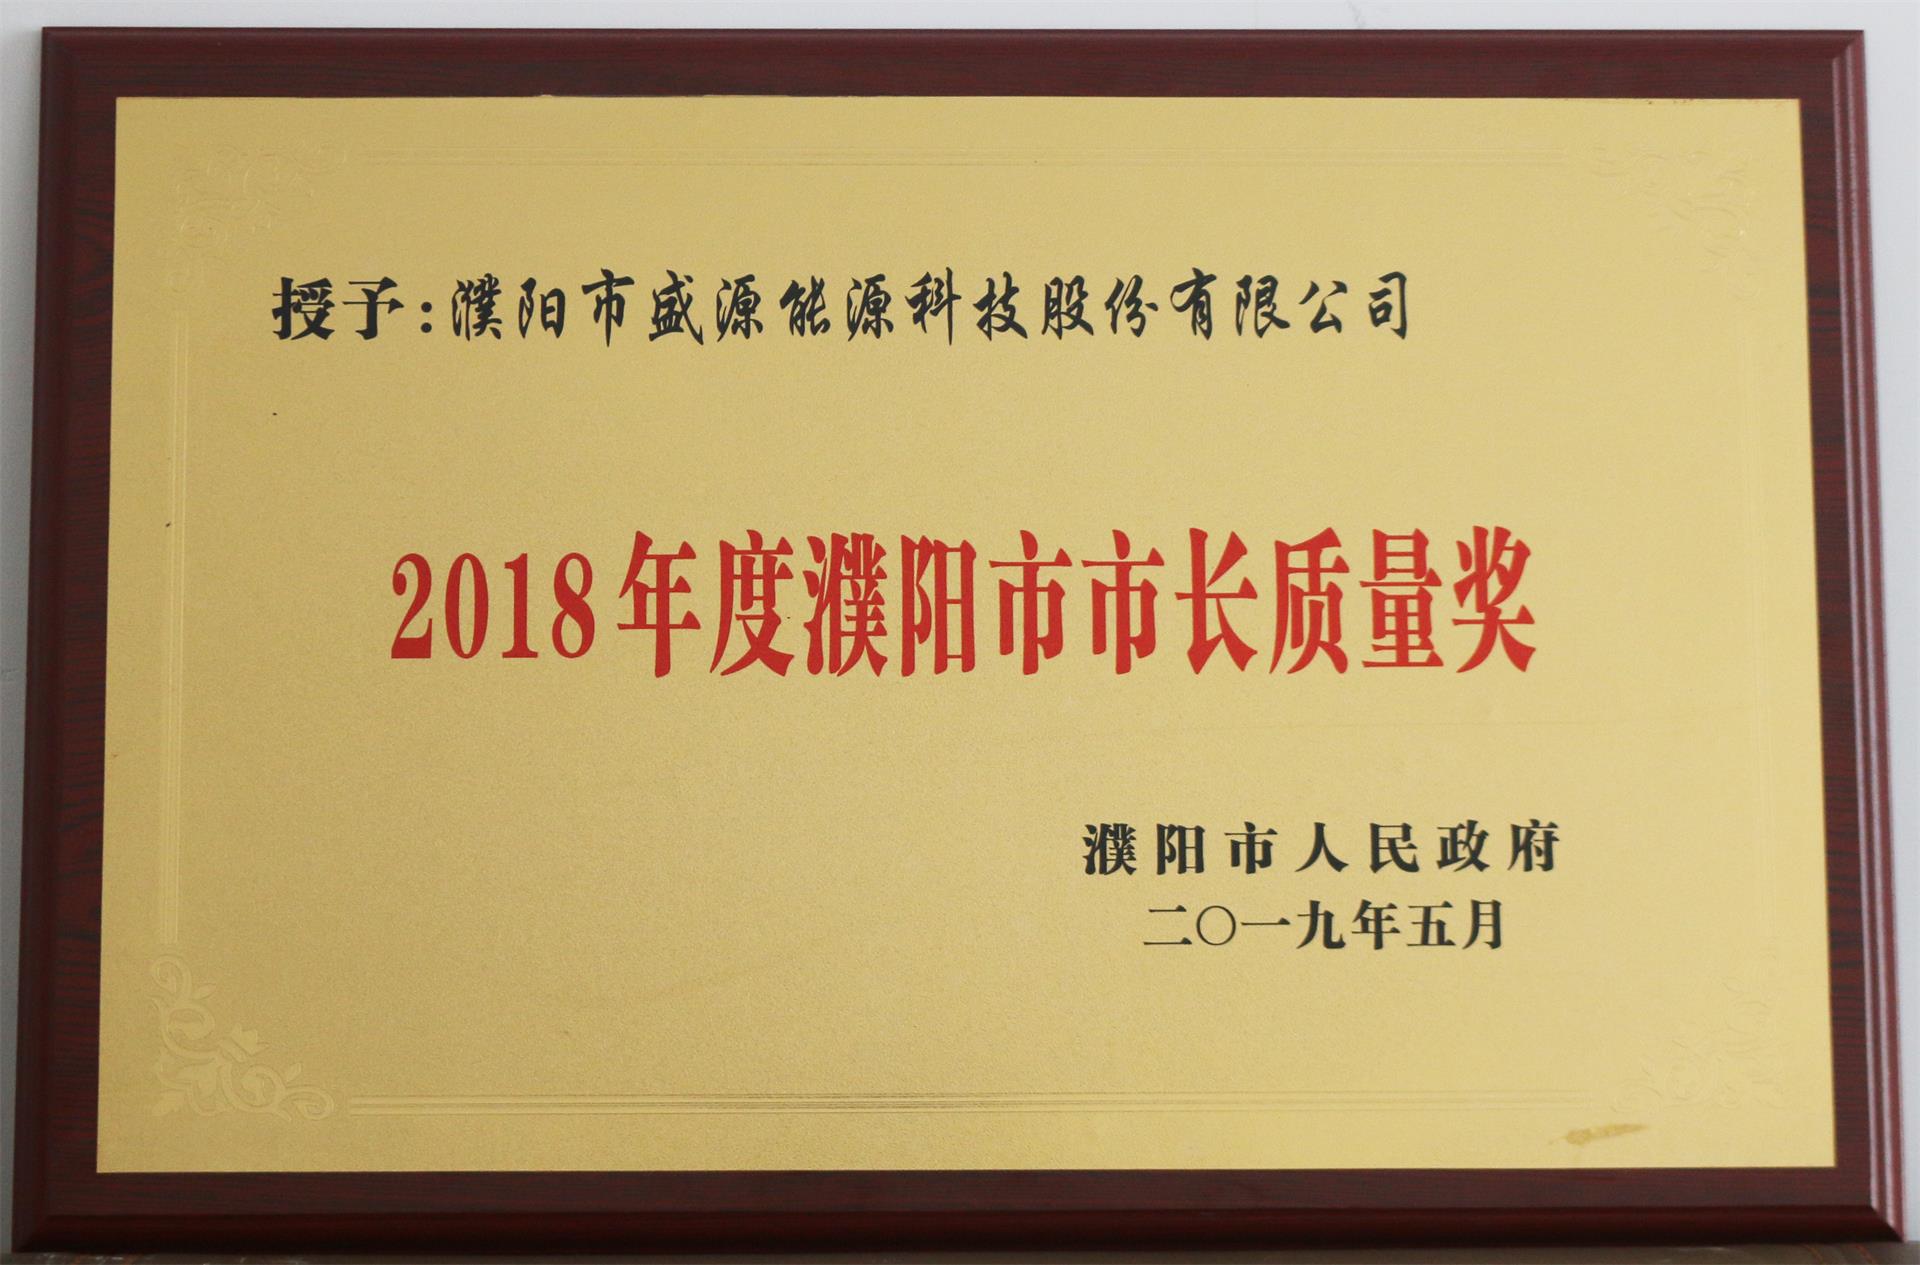 13.2019年5月，盛源科技榮獲“2018年度濮陽市市長質量獎”榮譽稱號.JPG